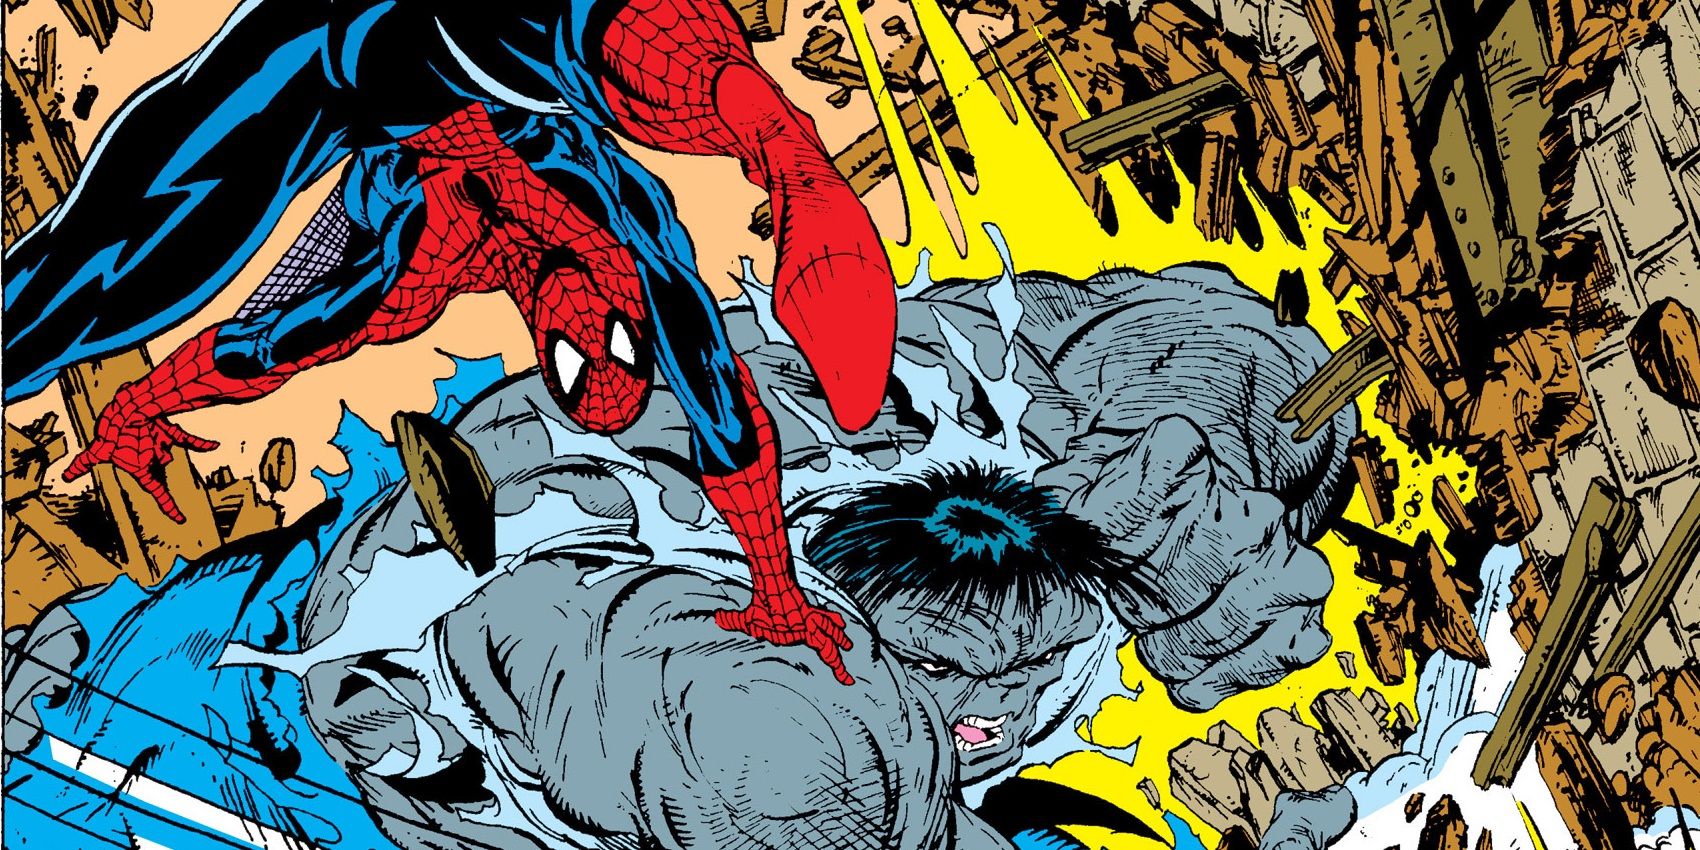 Spider-Man beats Hulk in a fight in Marvel Comics.